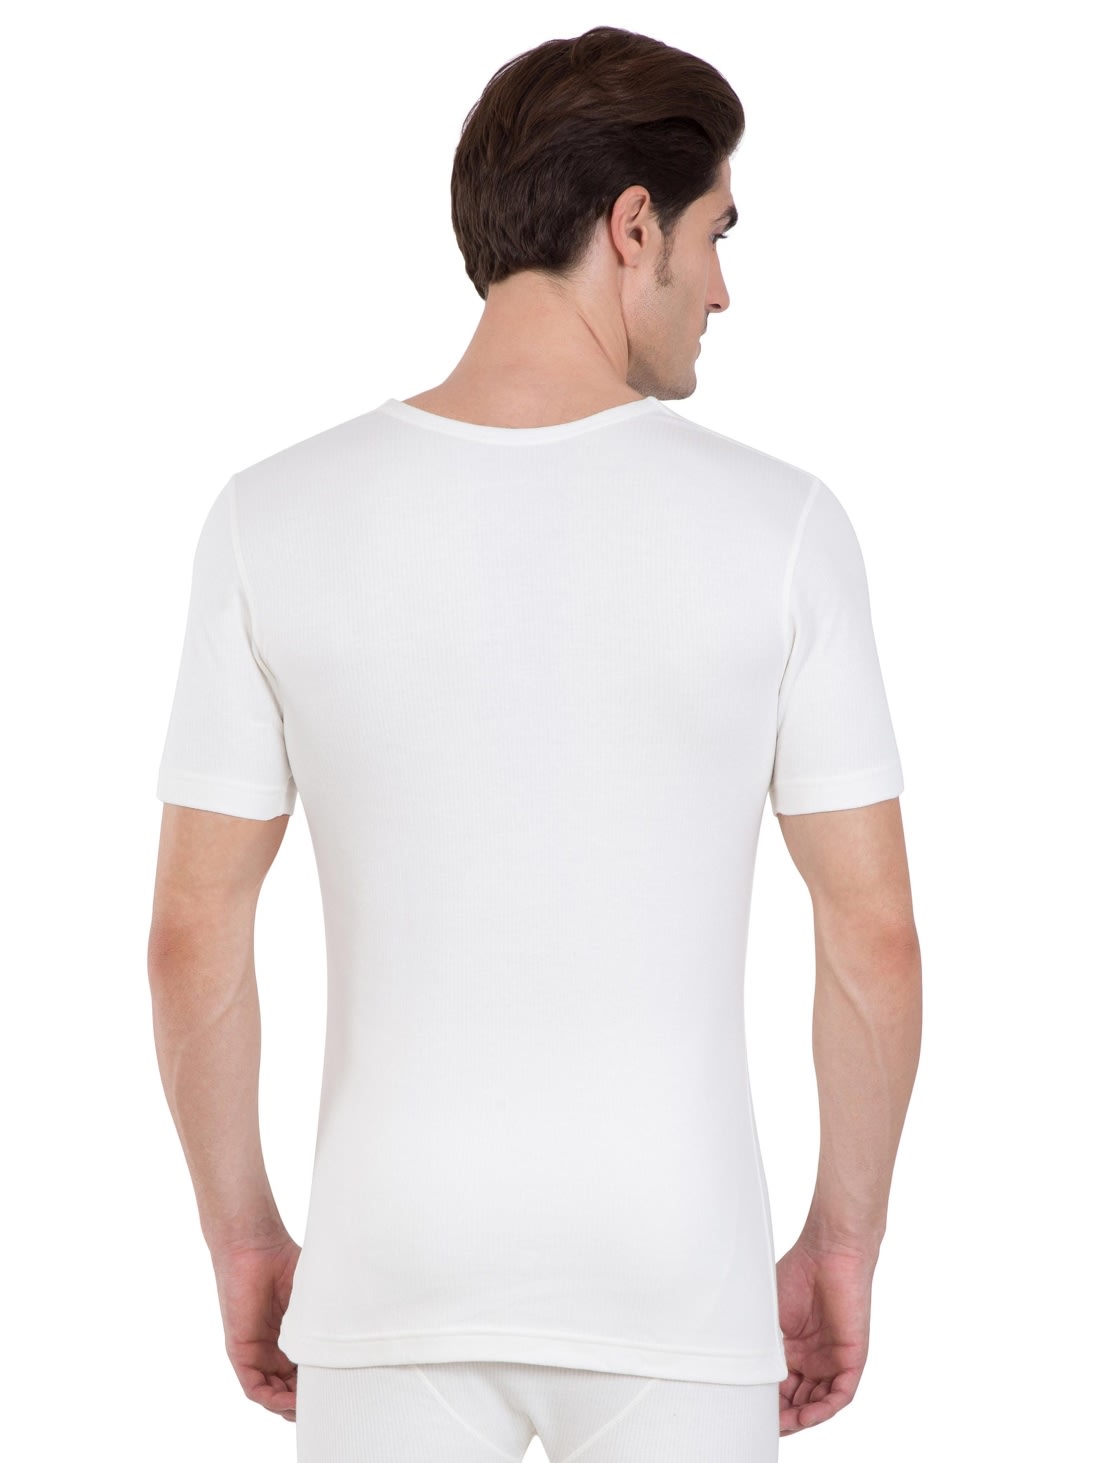 Buy Men Sleeved Vest Thermals 2400 Off White |Jockey India